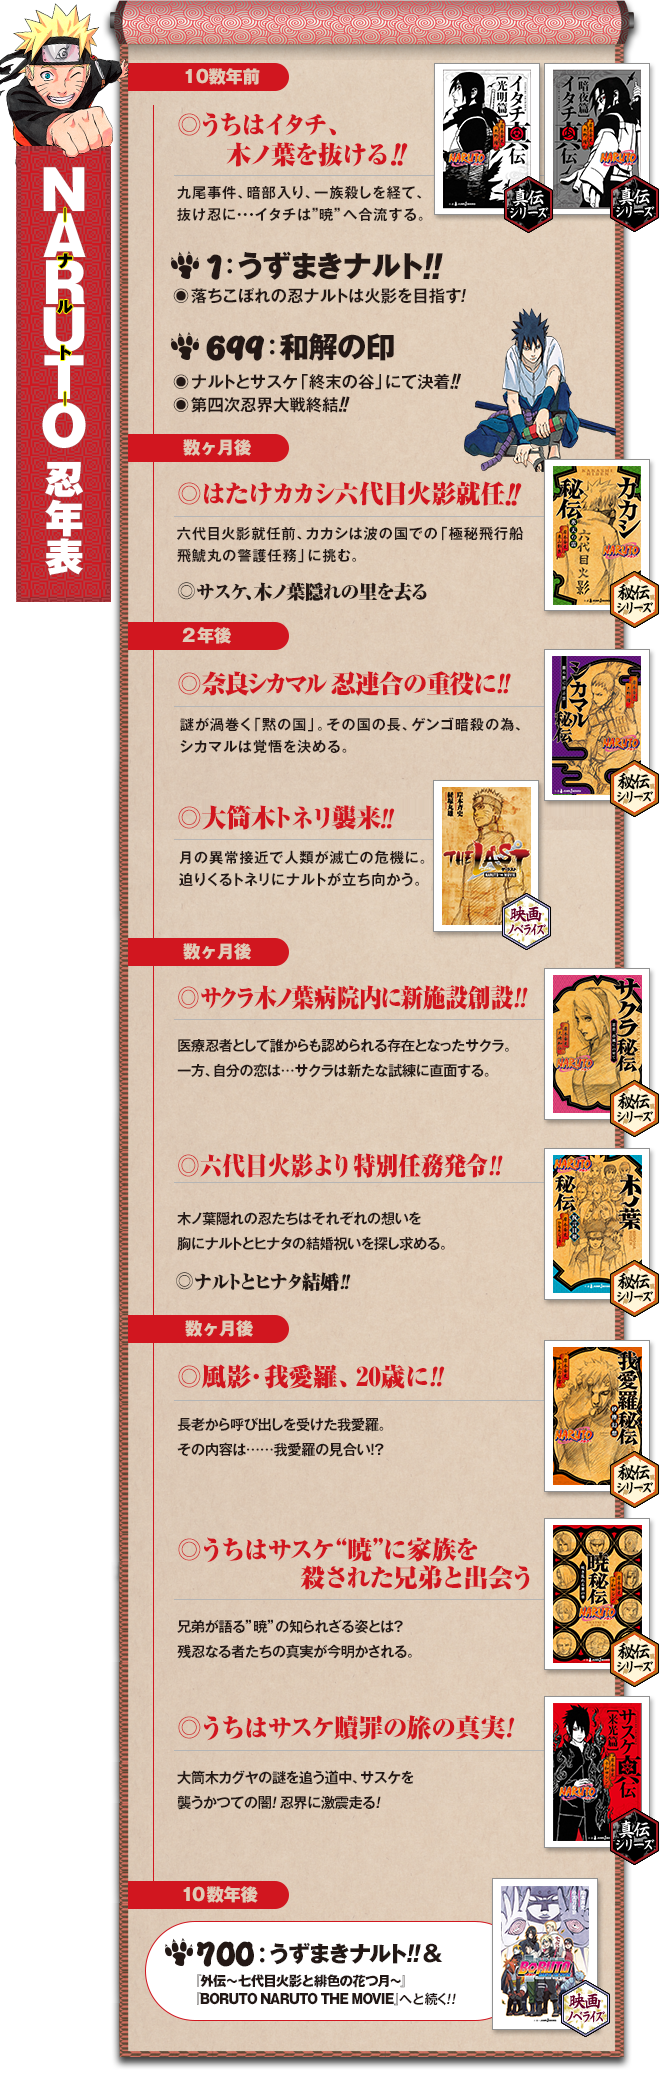 Rinnegan vs Tsukuyomi - Página 2 Latest?cb=20151214205959